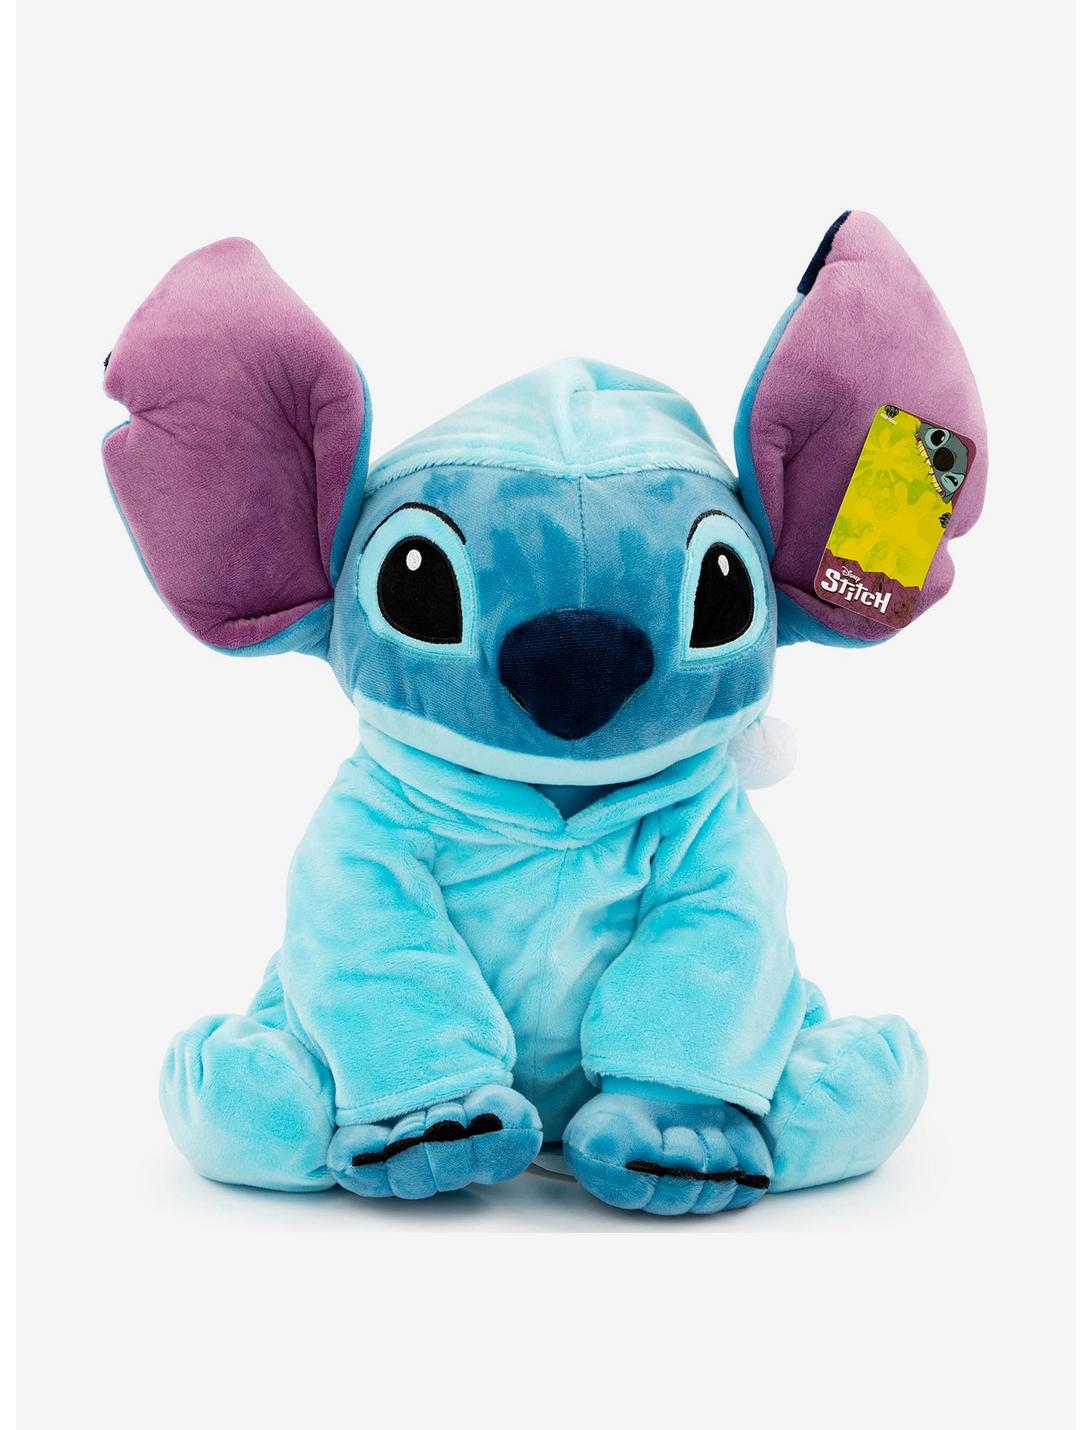 Disney Lilo & Stitch Pajamas Pillow Buddy Plush